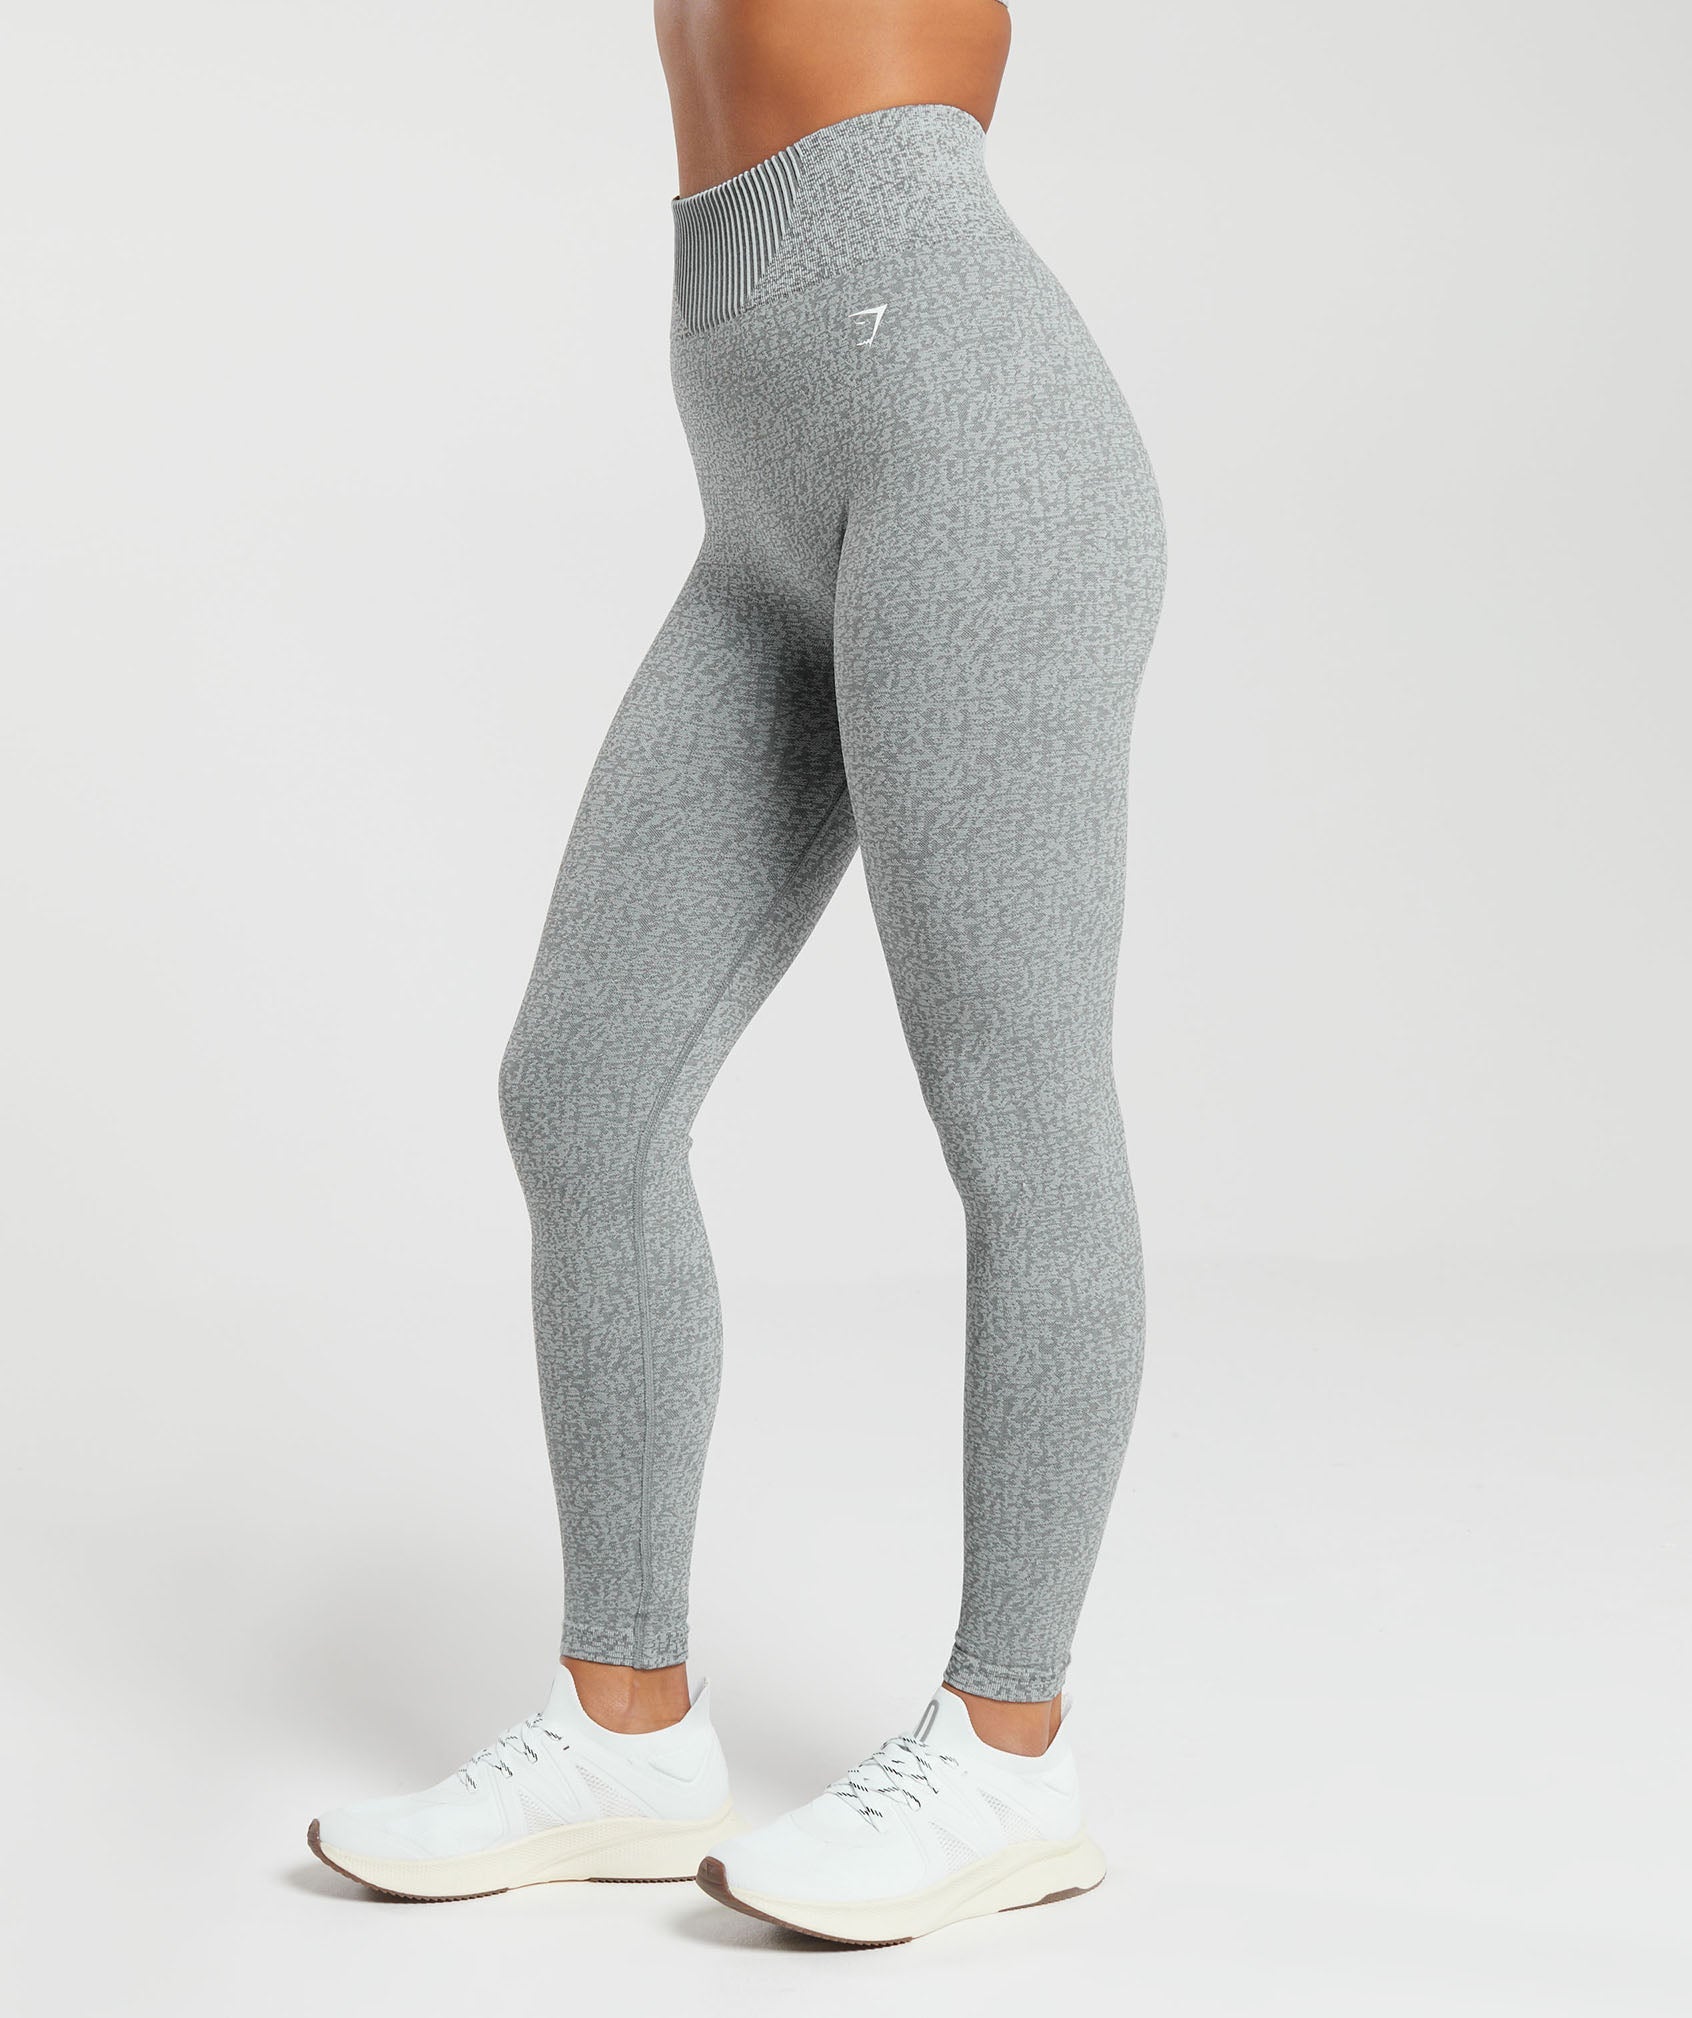 NWT Gymshark FIT SEAMLESS LEGGINGS  Seamless leggings, Clothes design,  Fashion tips